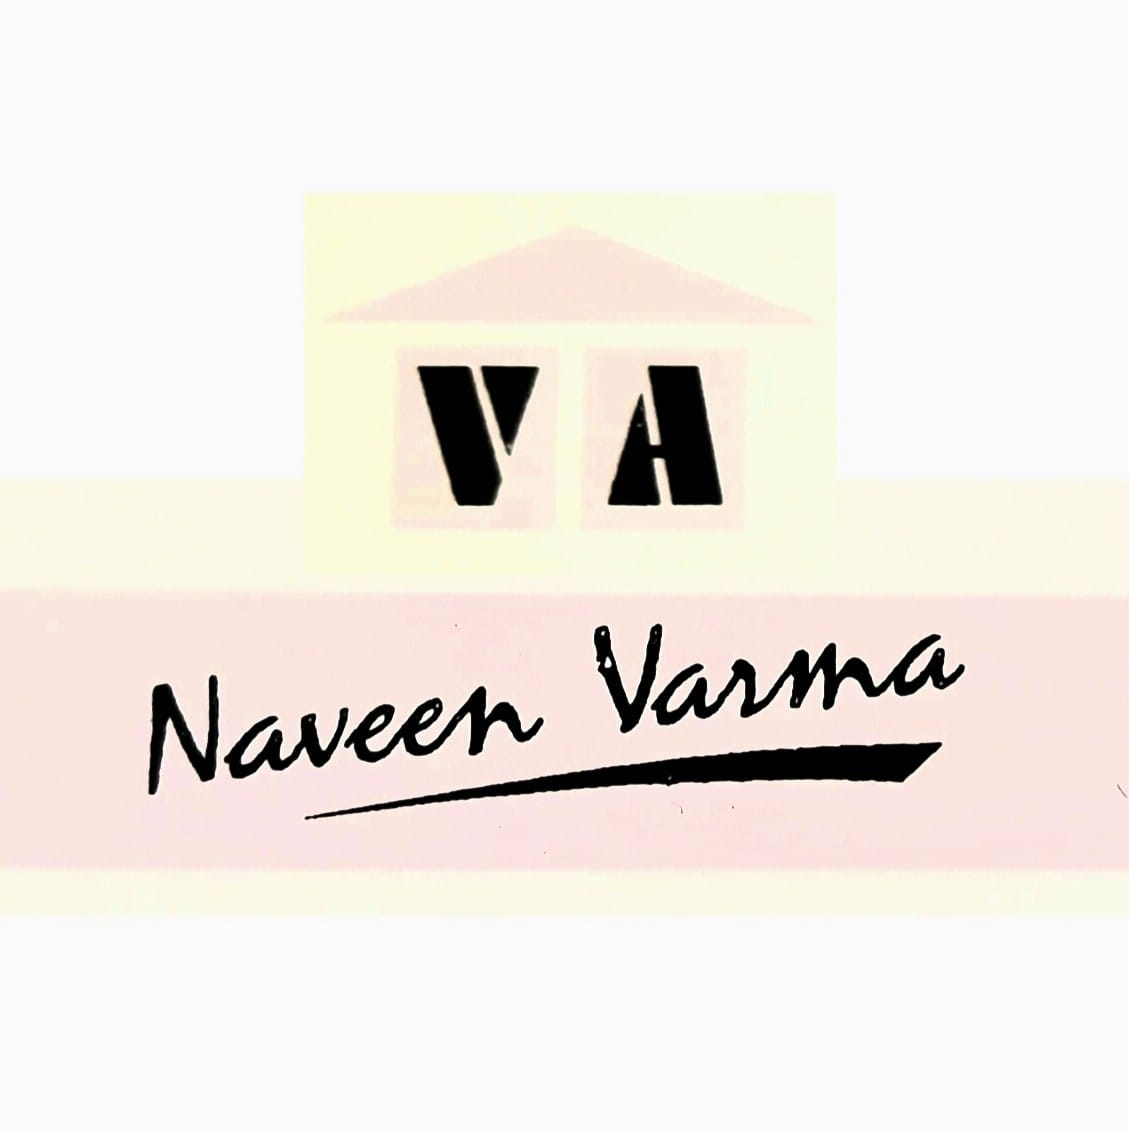 Varma & Associates - Naveen Varma|Accounting Services|Professional Services